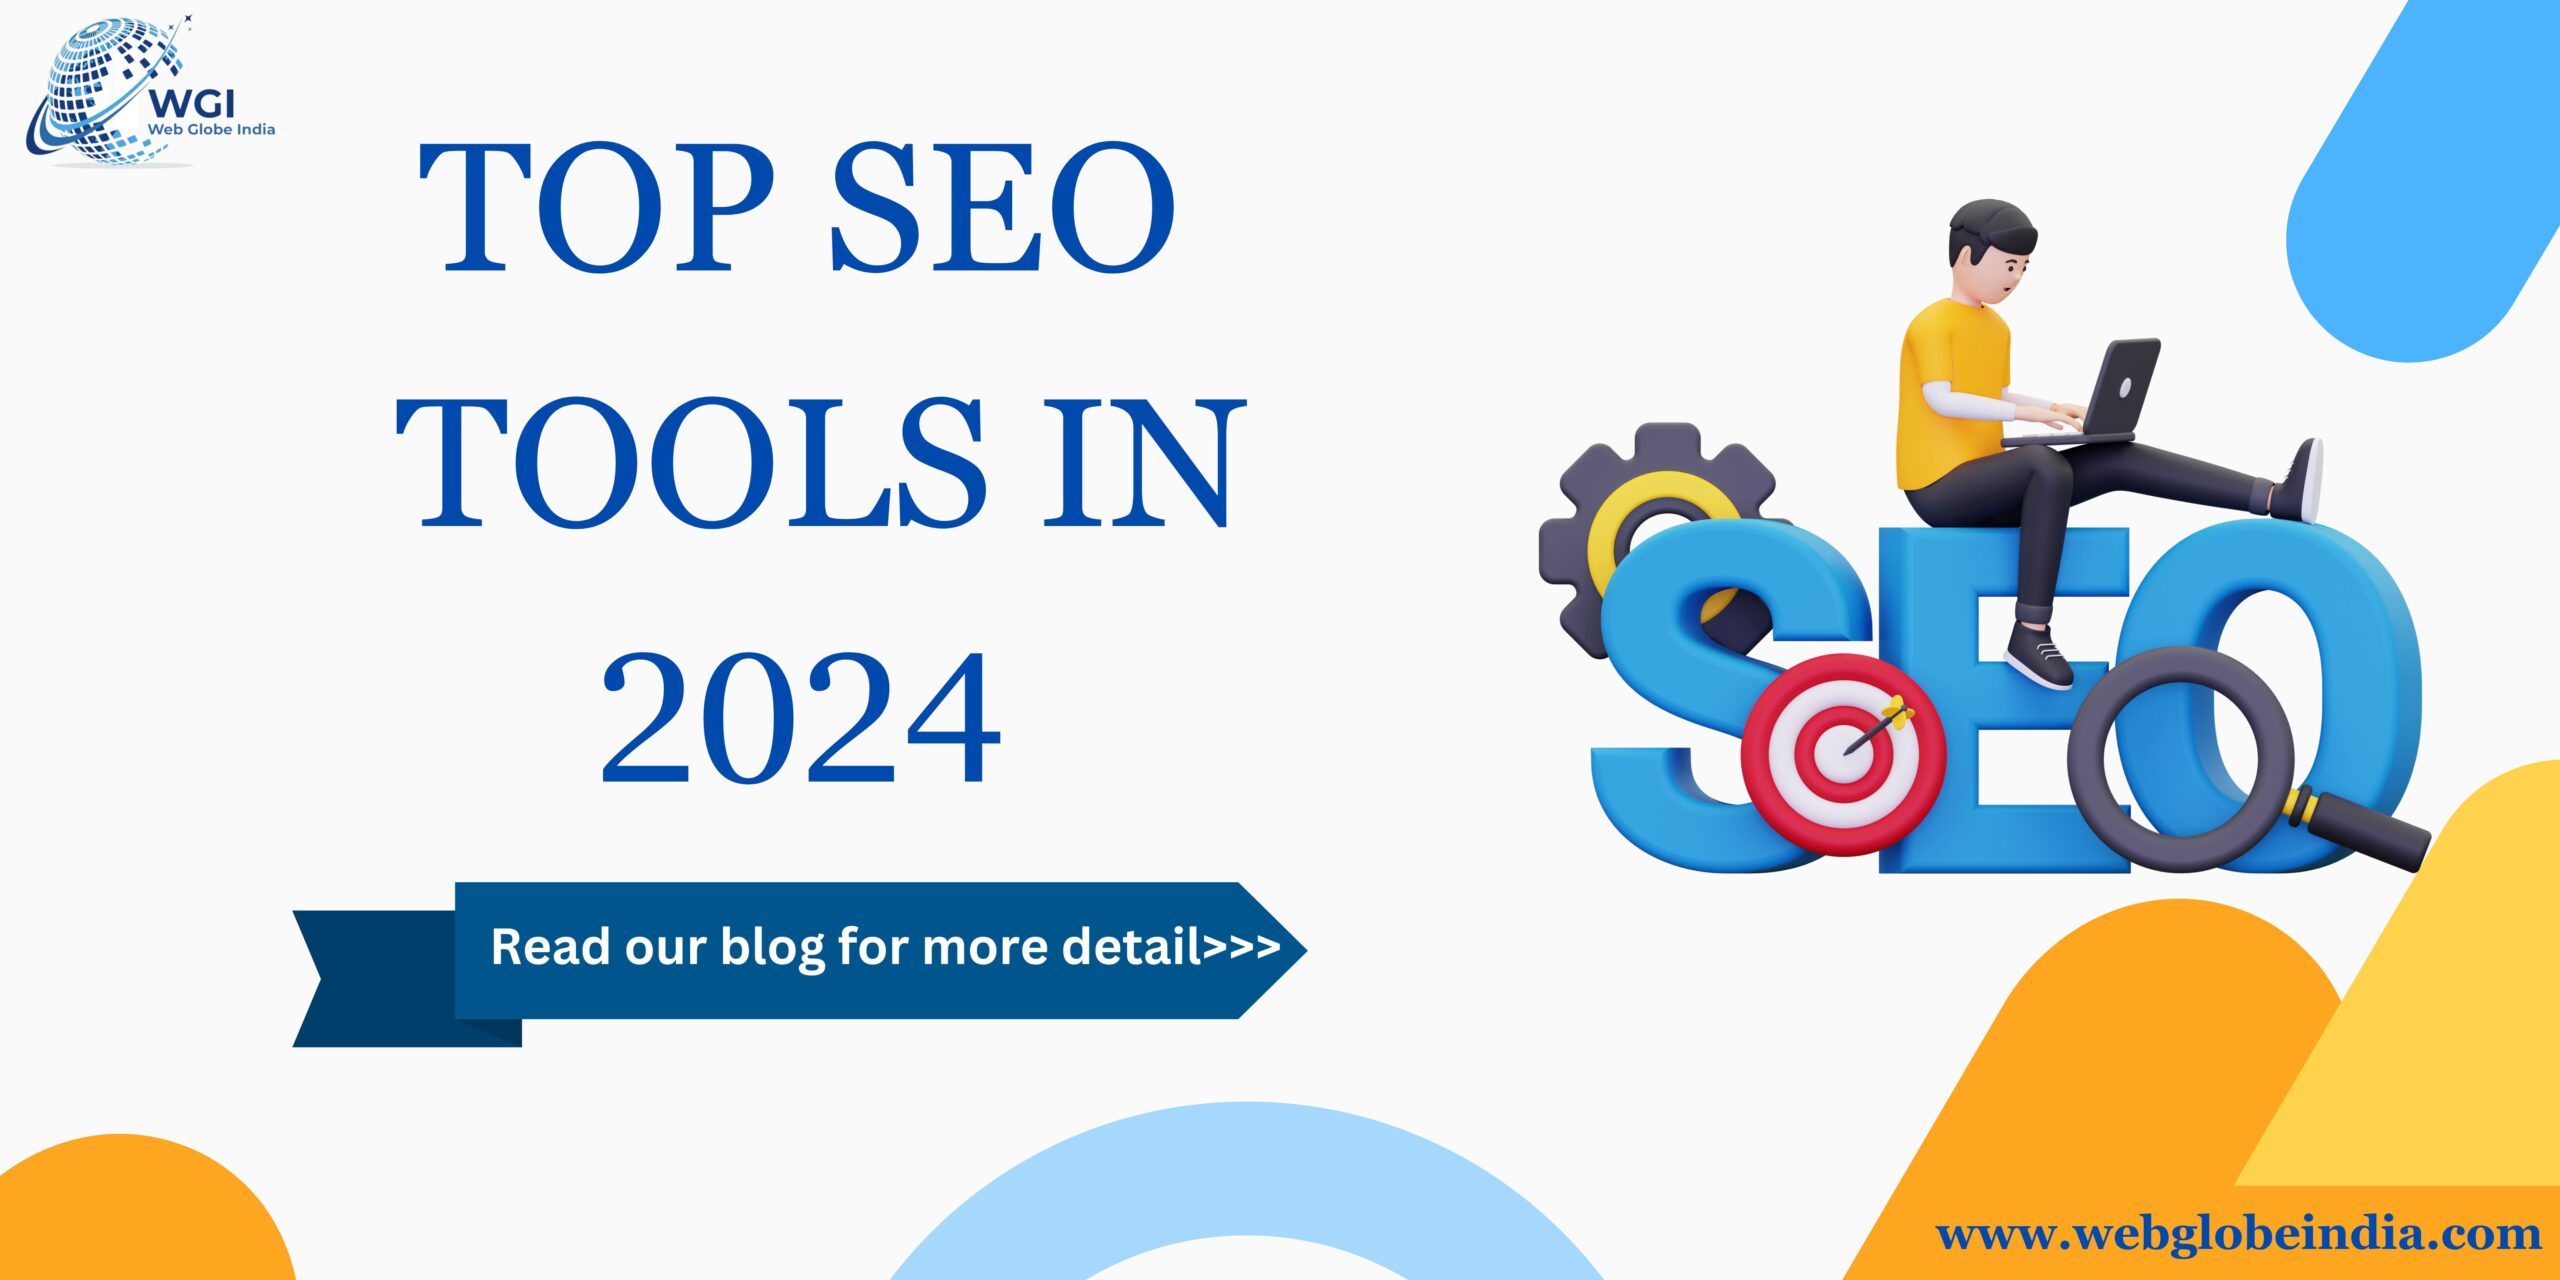 Top seo tools in 2024